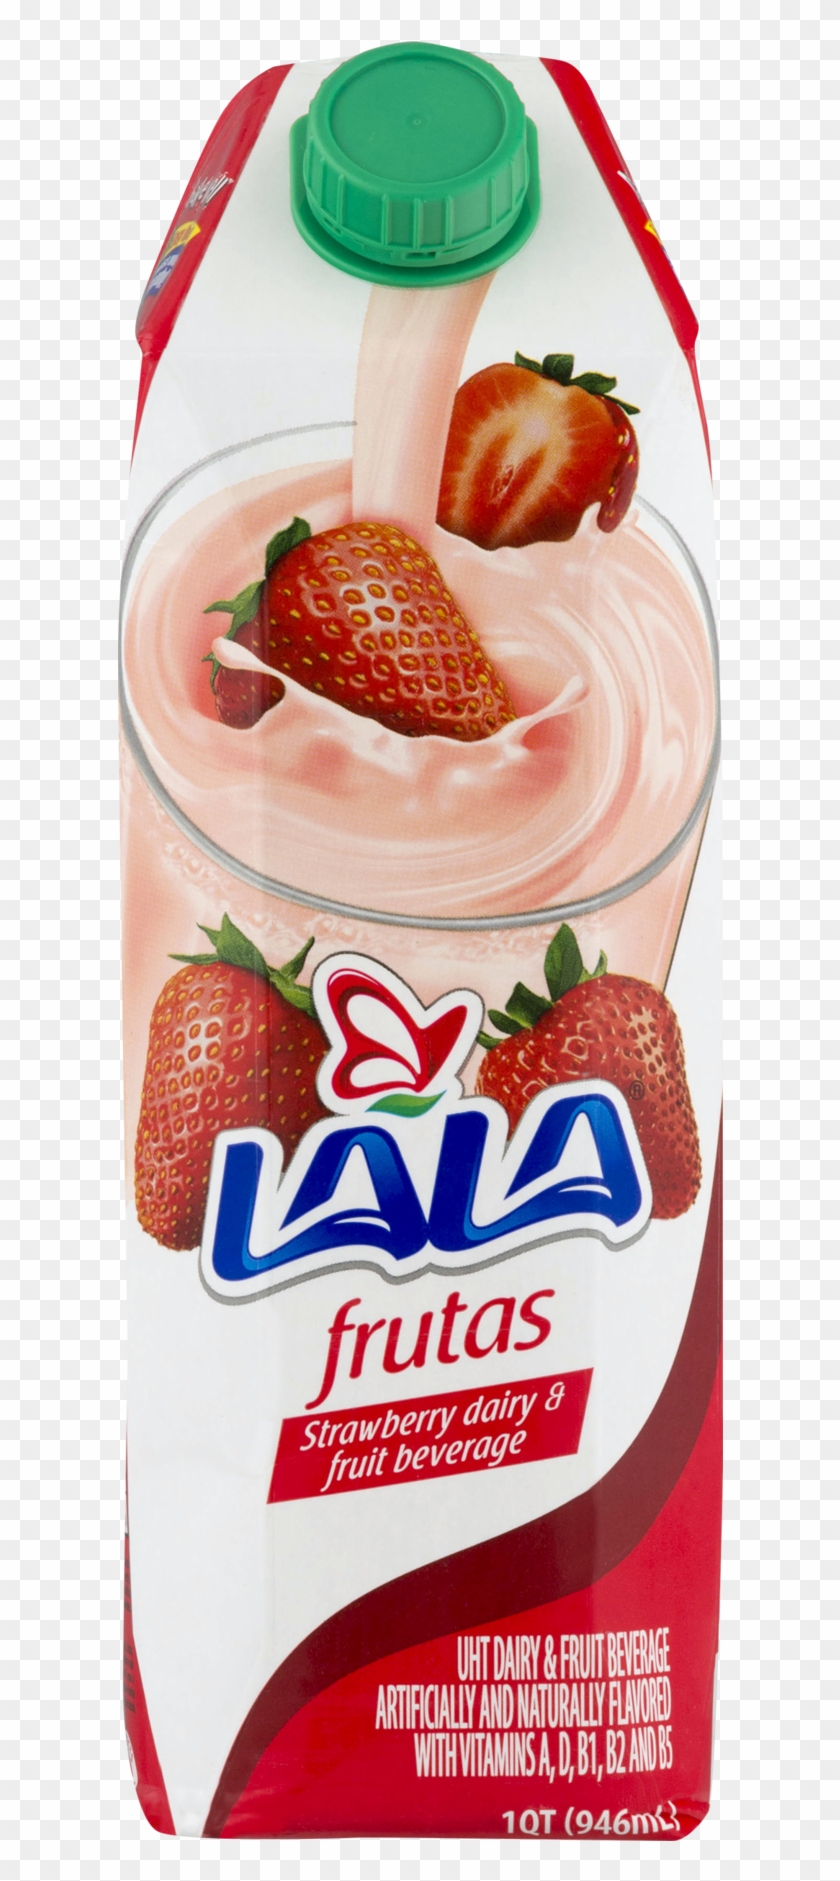 Lala Frutas Strawberry Fruit Drink, 2% Dairy Milk, - Lala Frutas Clipart #1908683